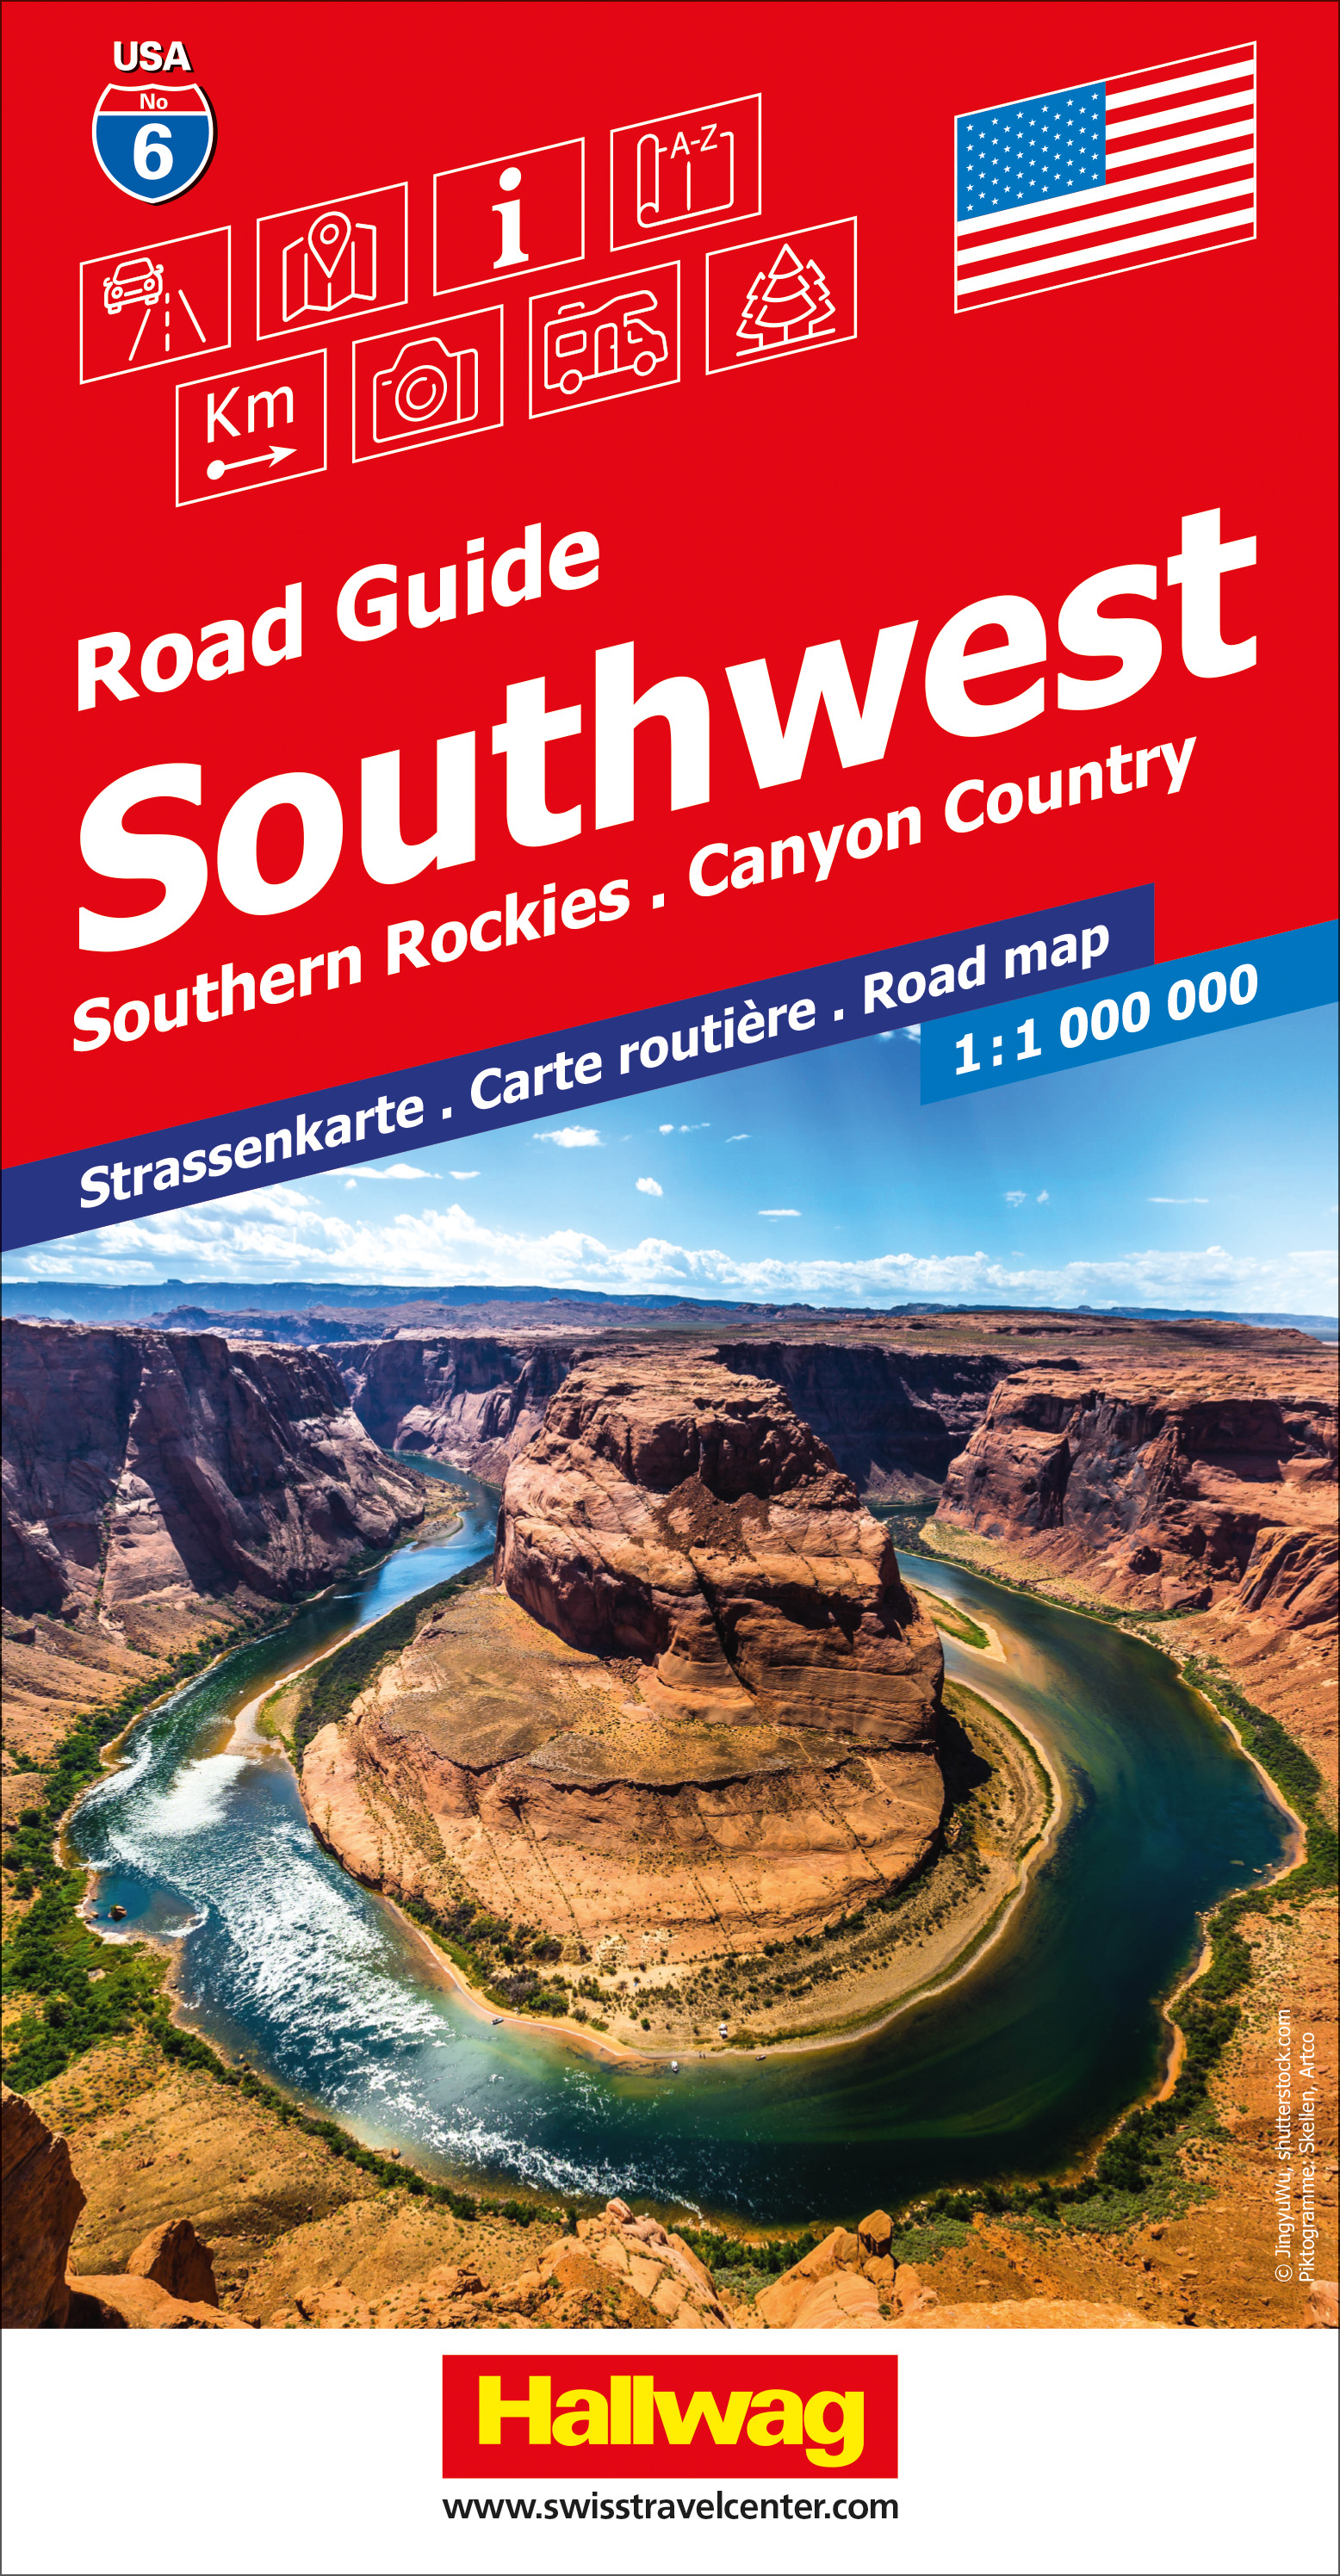 Online bestellen: Wegenkaart - landkaart 06 Southwest, zuidwest USA - Utah, Colorado, Arizona & New Mexico | Hallwag